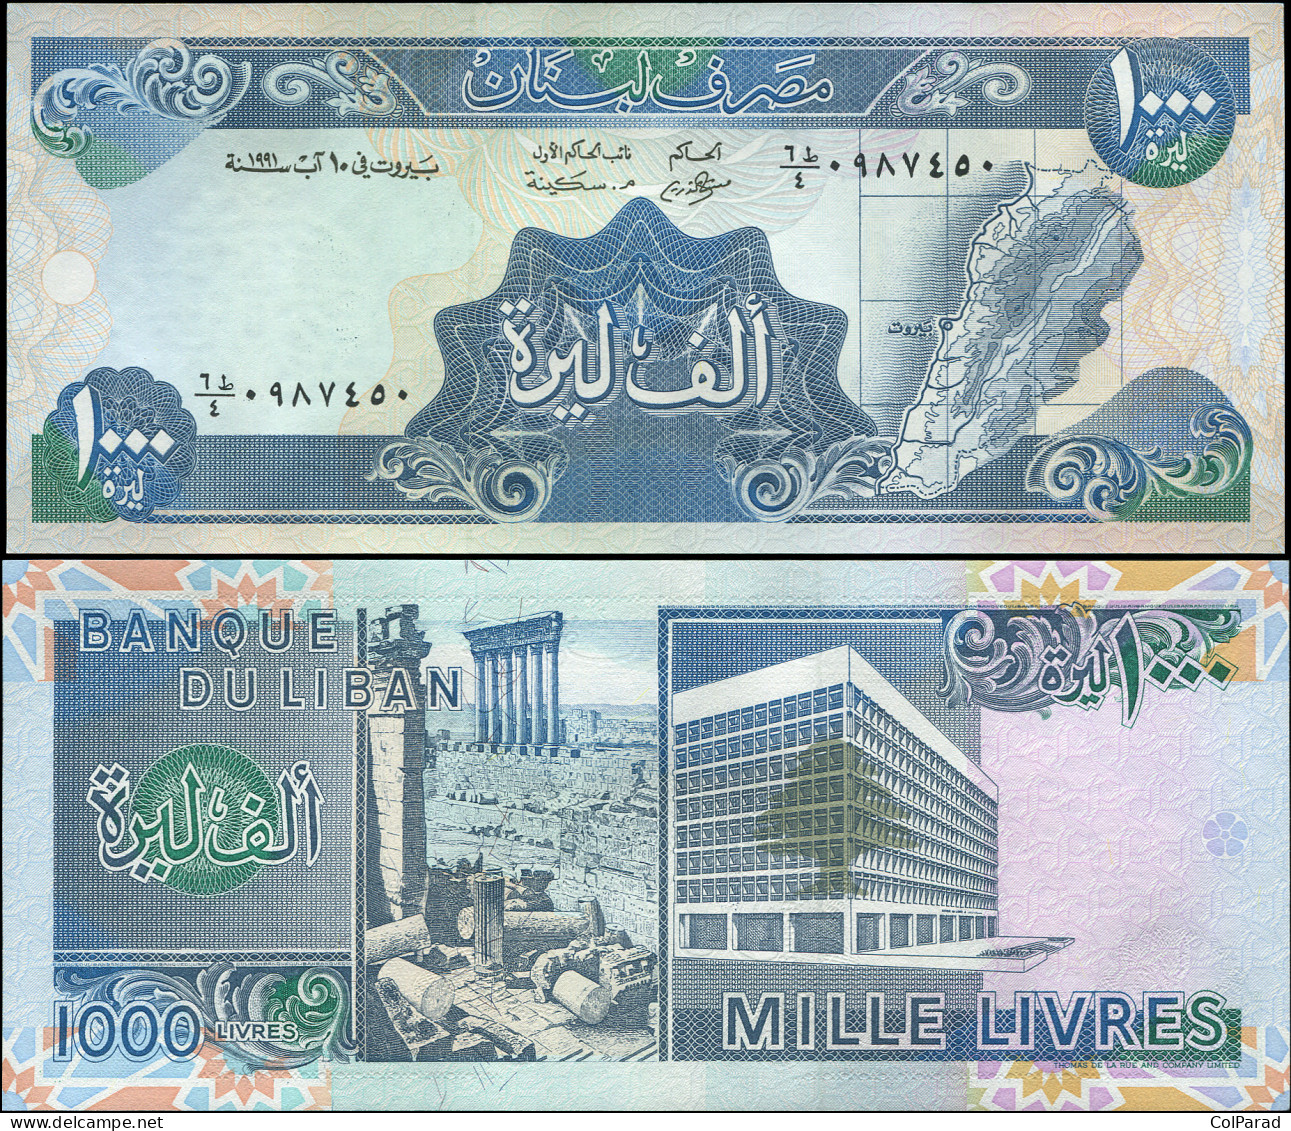 LEBANON 1000 LIVRES - ١٩٩١ (1991) - Paper Unc - P.69c Banknote - Lebanon